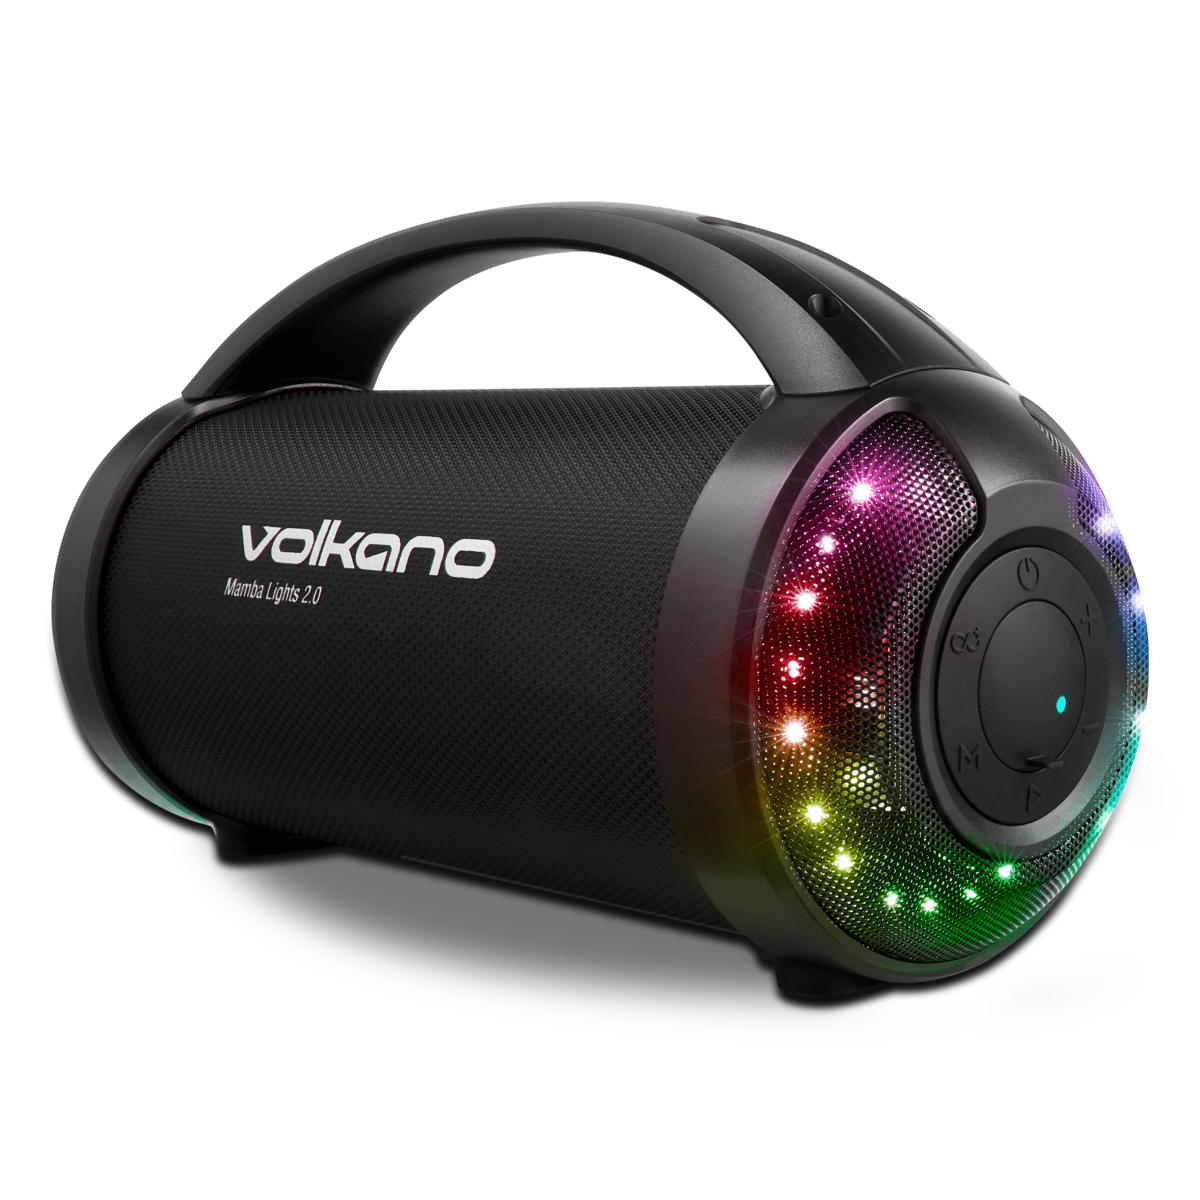 Volkano Mamba Lights Bluetooth Speaker